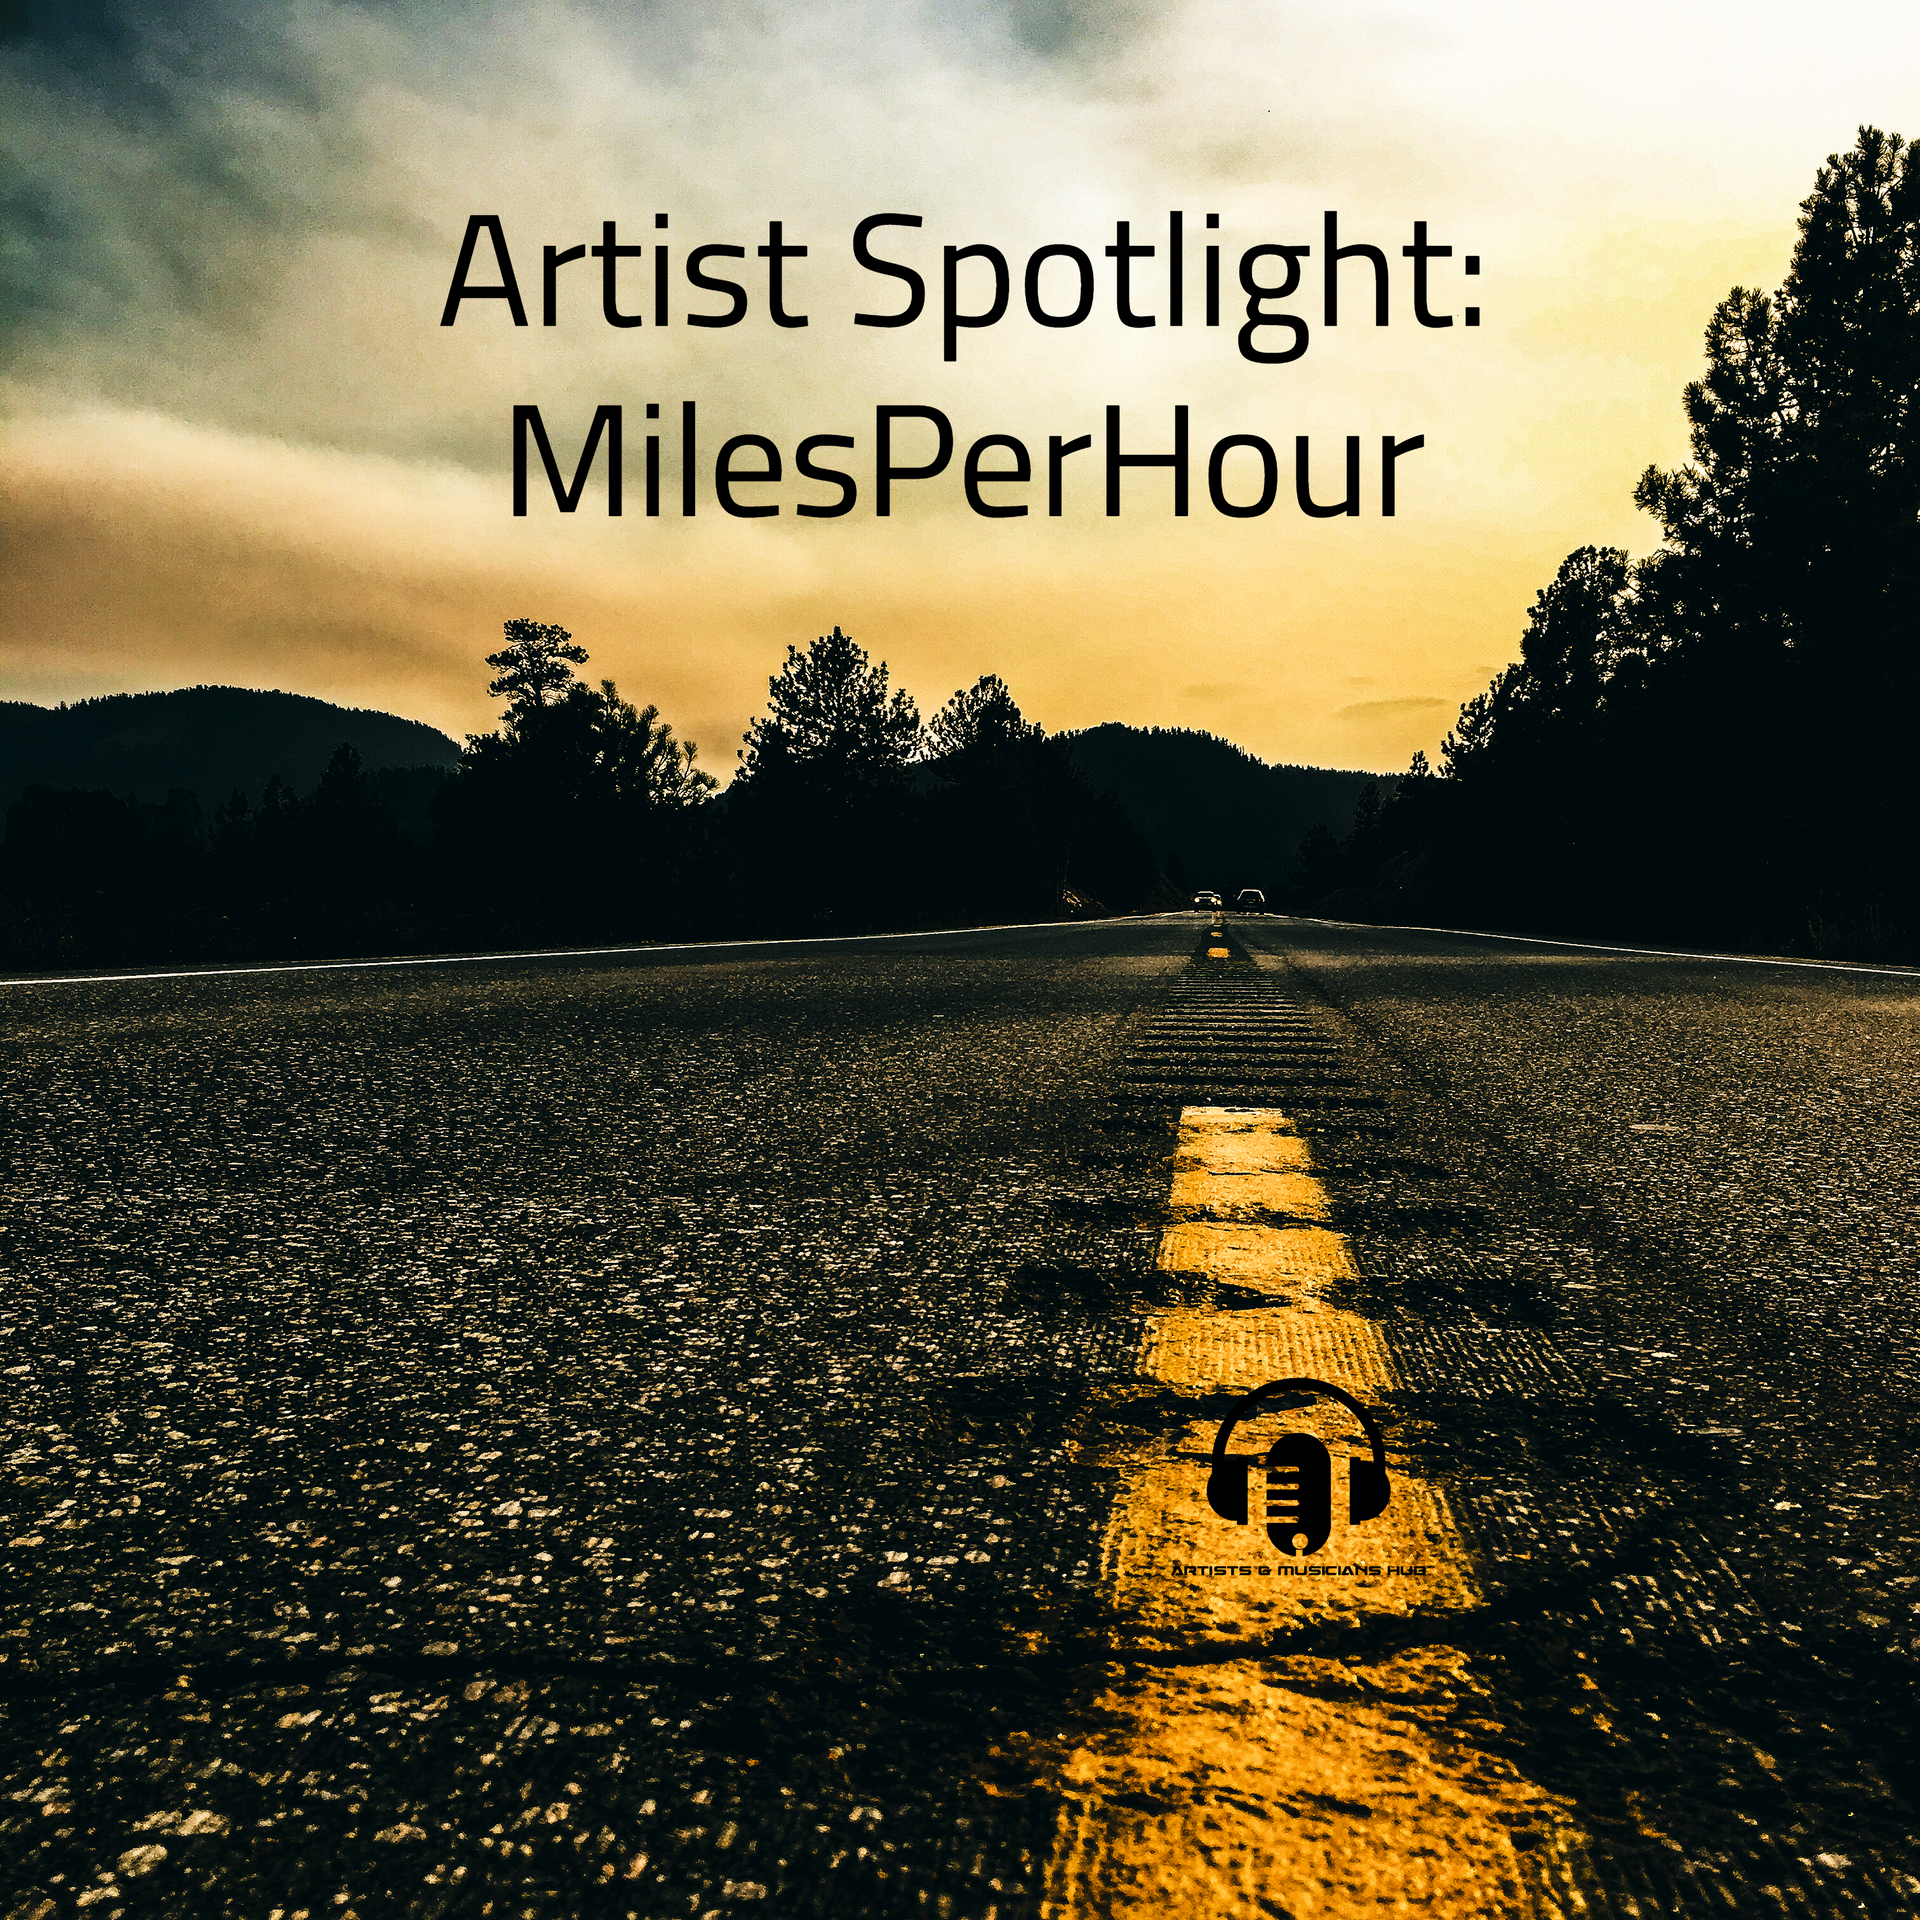 Artist Spotlight: Miles Per Hour